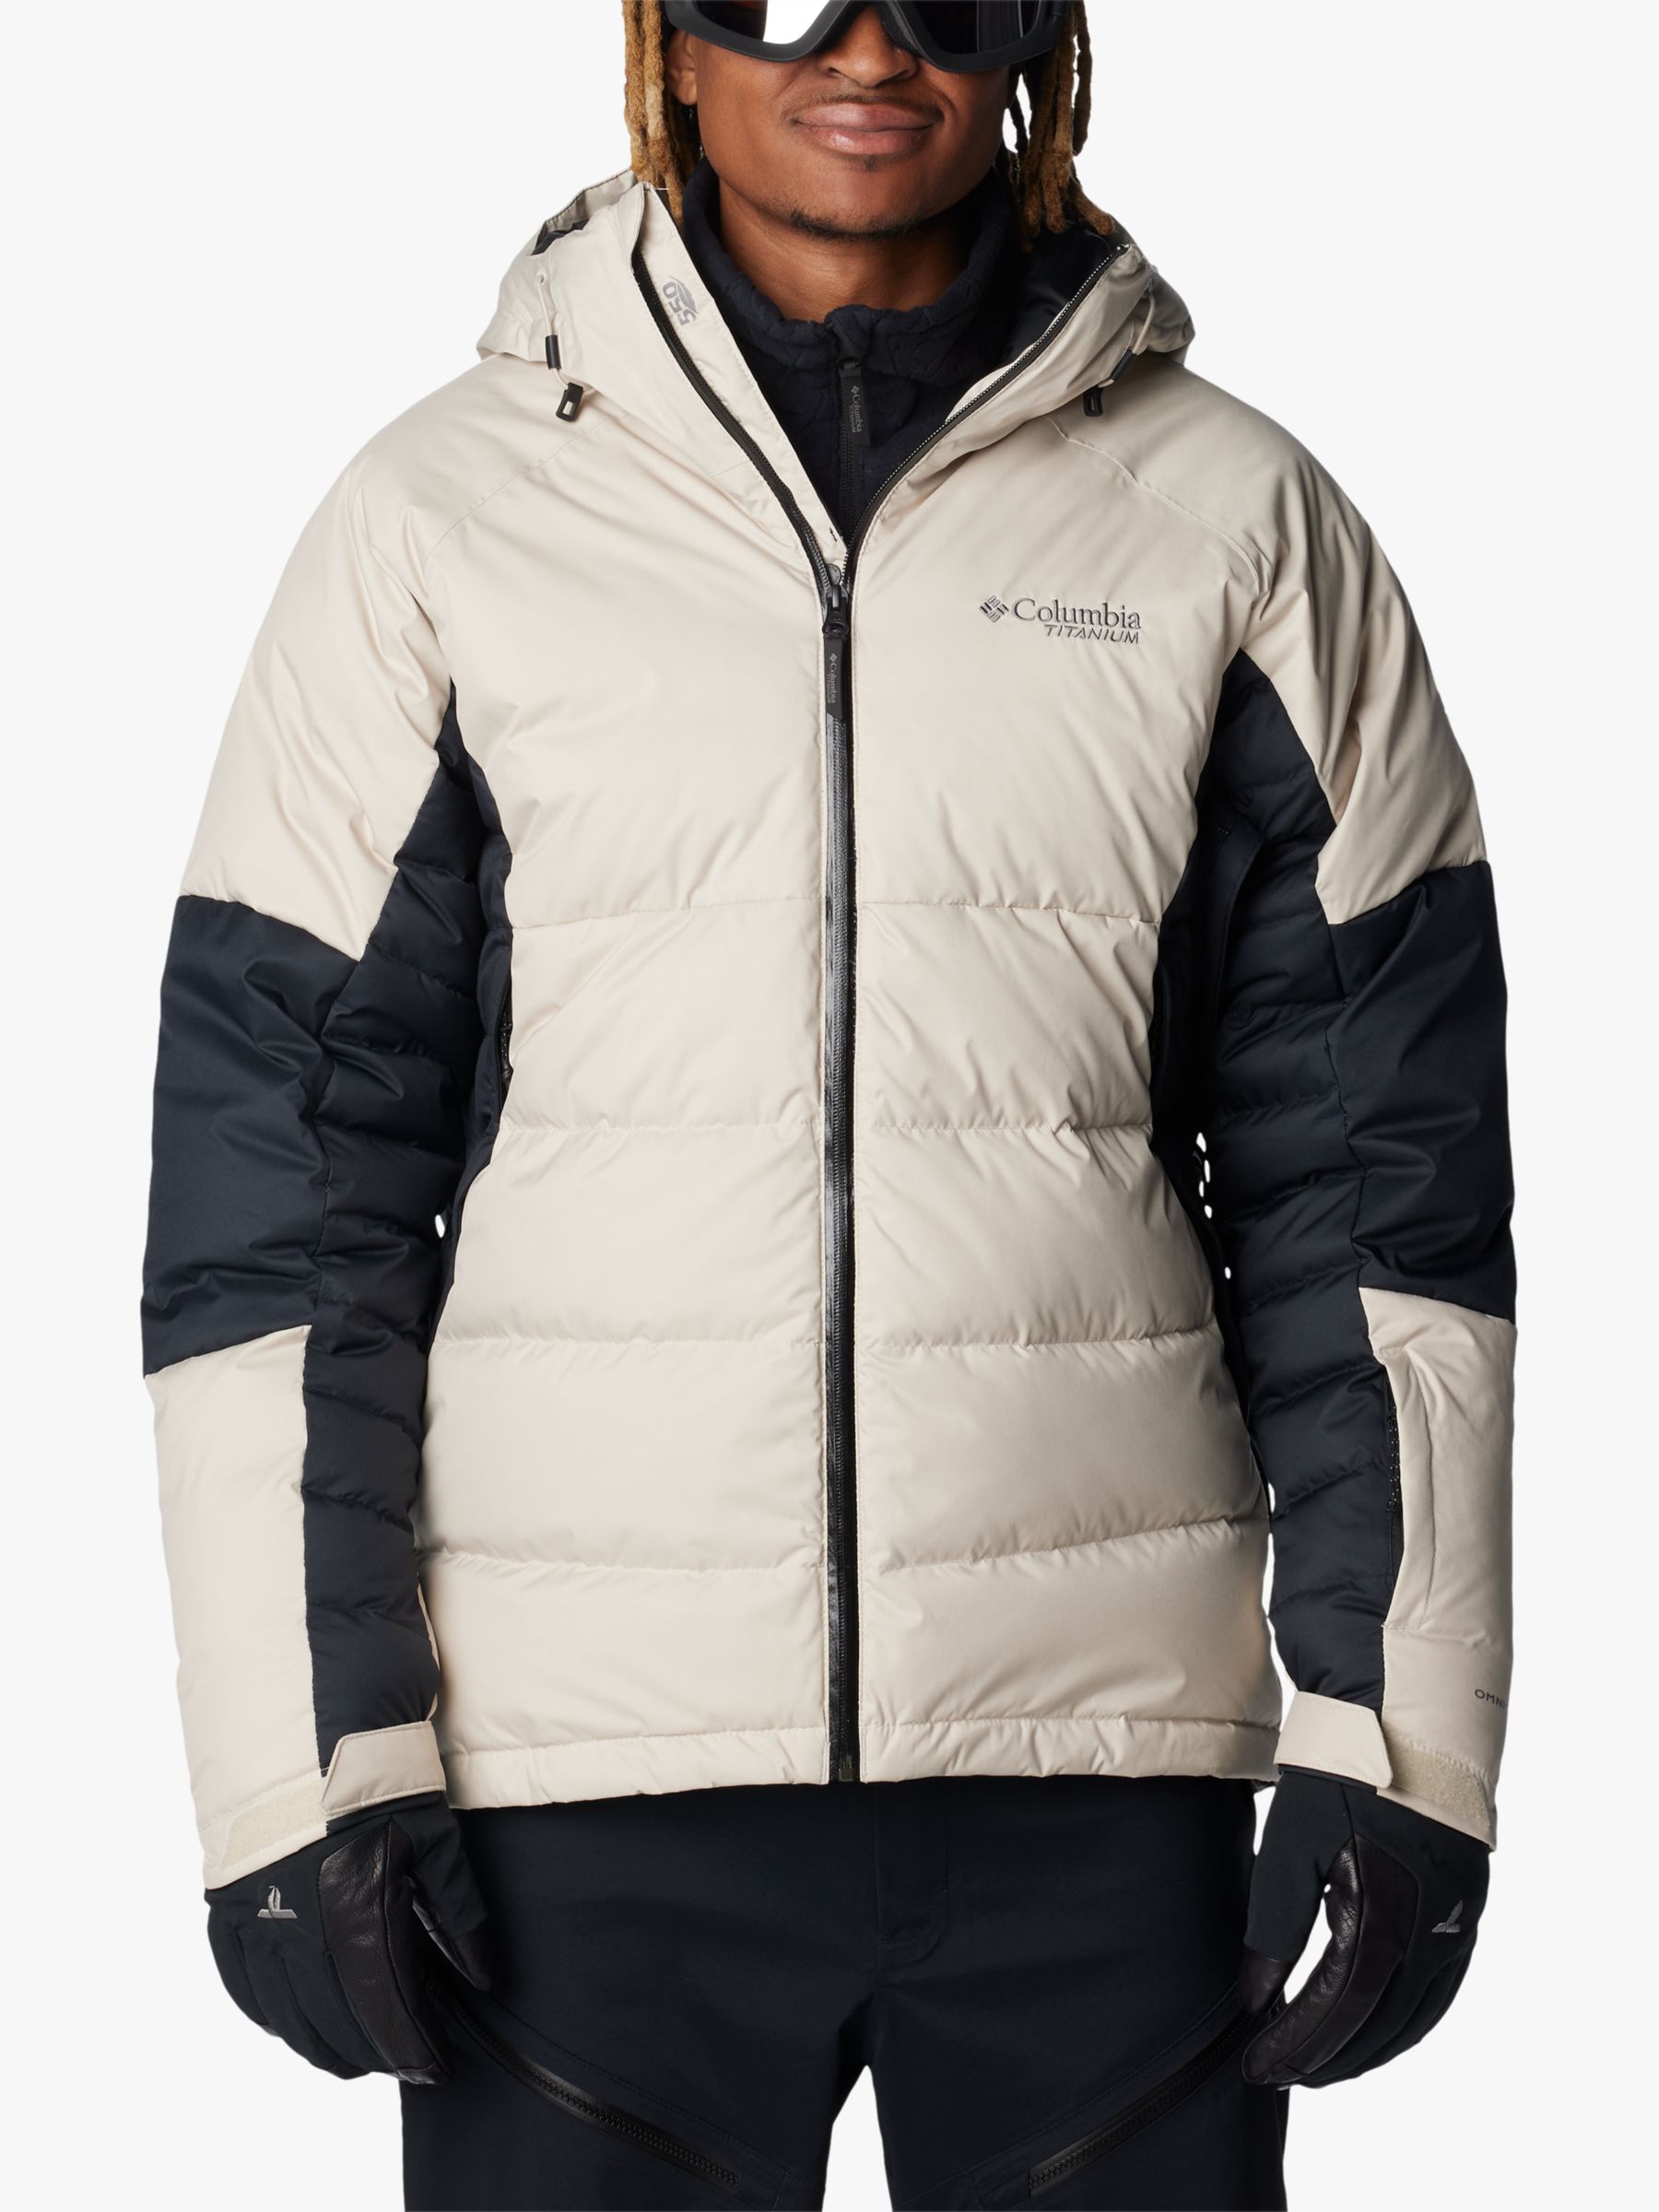 цена Мужская водонепроницаемая лыжная куртка Roaring Fork Columbia, темный камень/черный